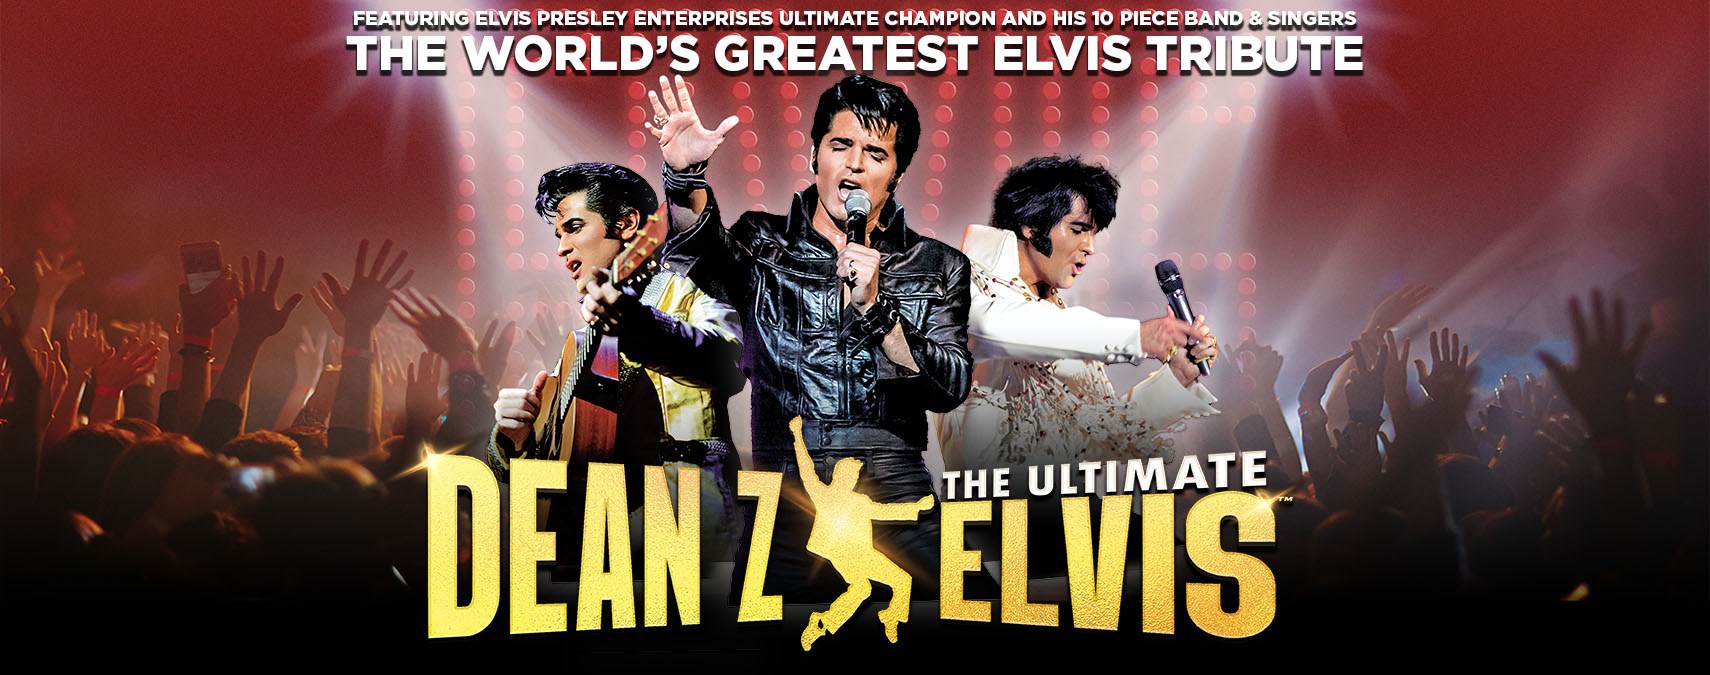 Dean Z - The Ultimate Elvis - April 30, 2022 at 7pm